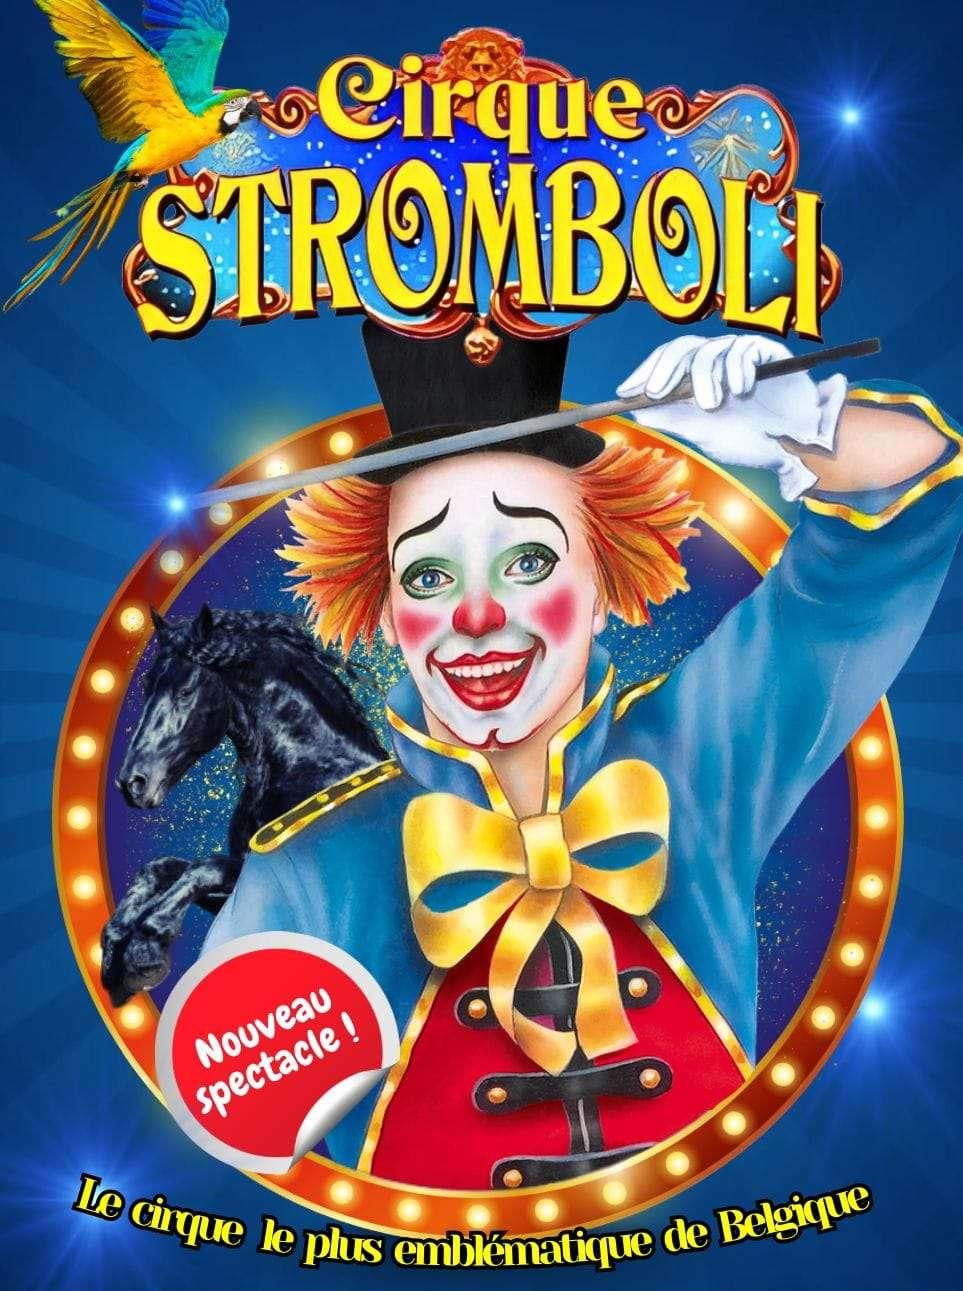 Cirque Stromboli